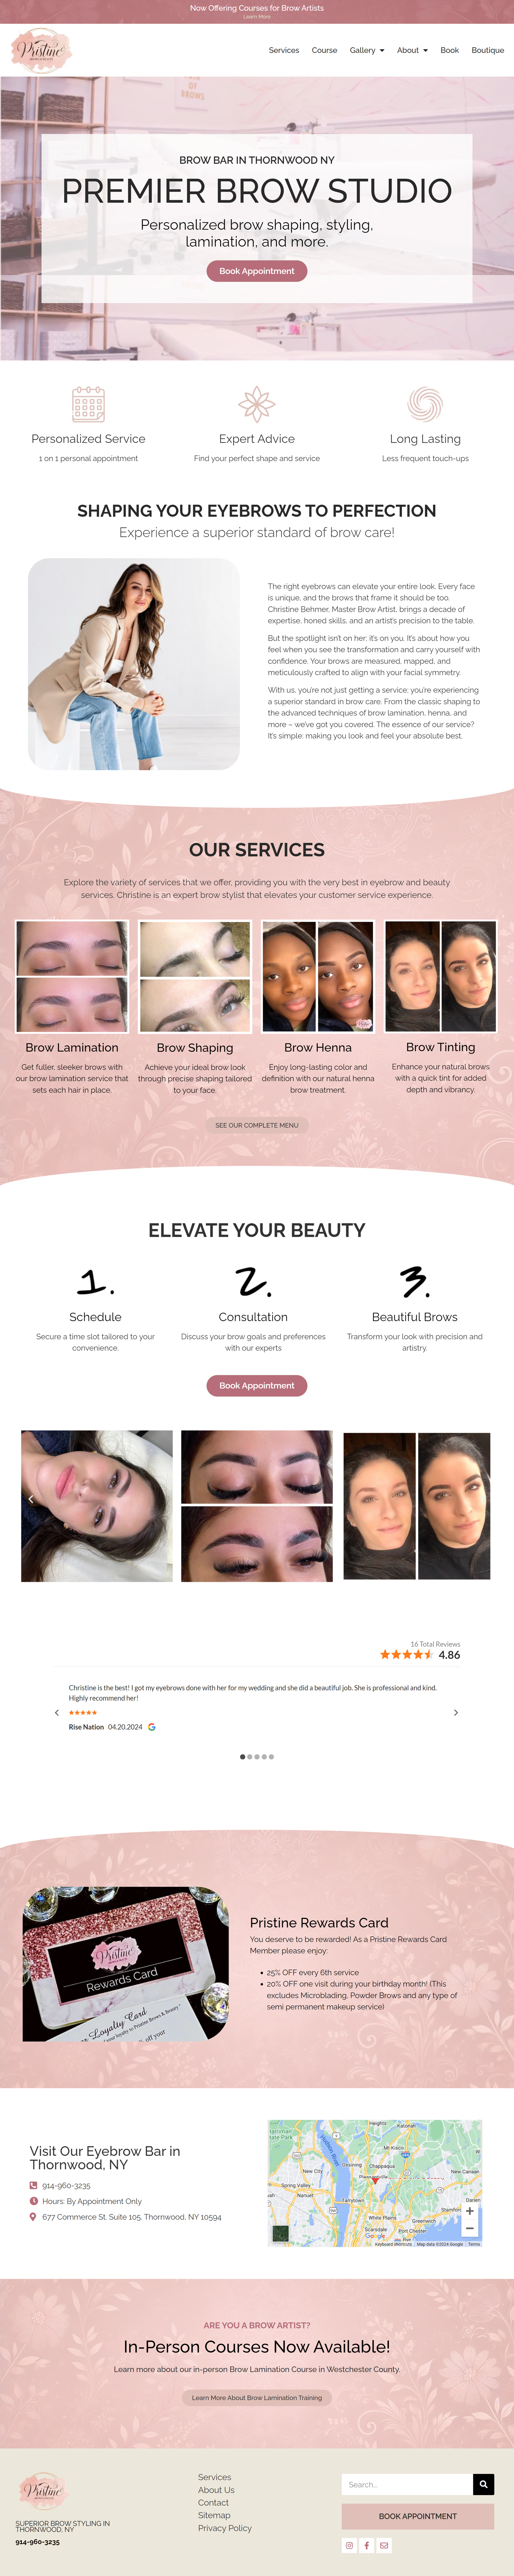 Brow Studio website design - pristinebrowsandbeauty.com